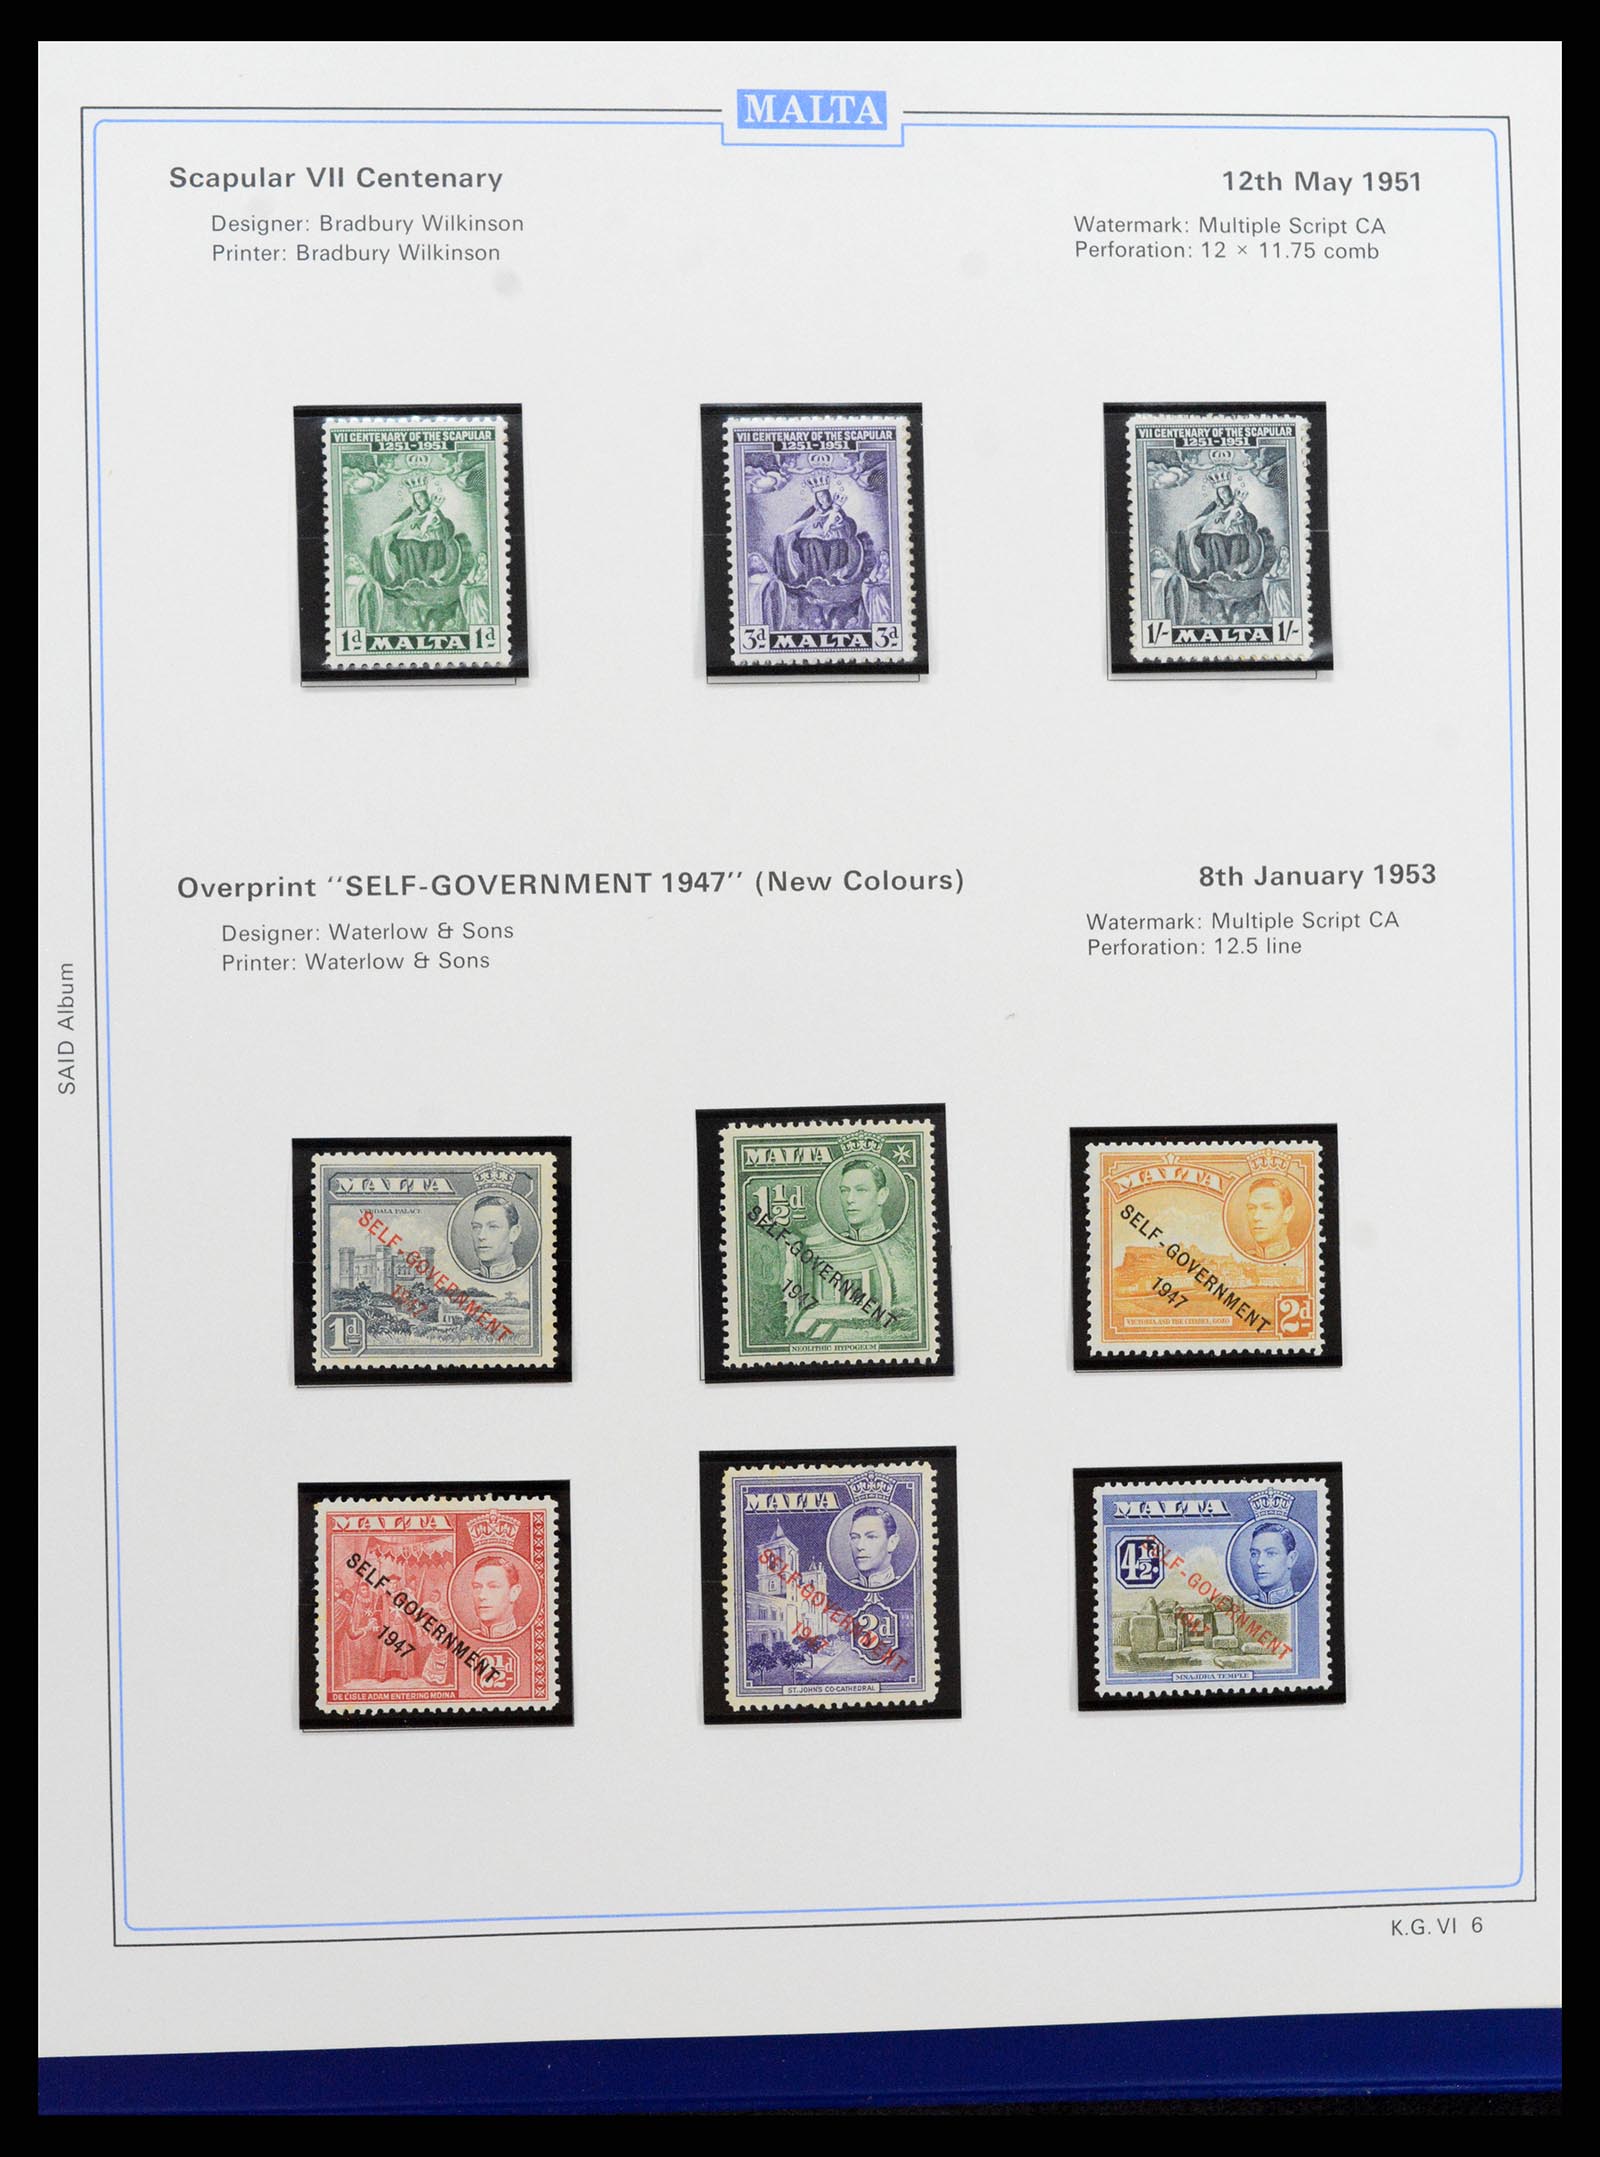 37374 020 - Stamp collection 37374 Malta 1885-2012.